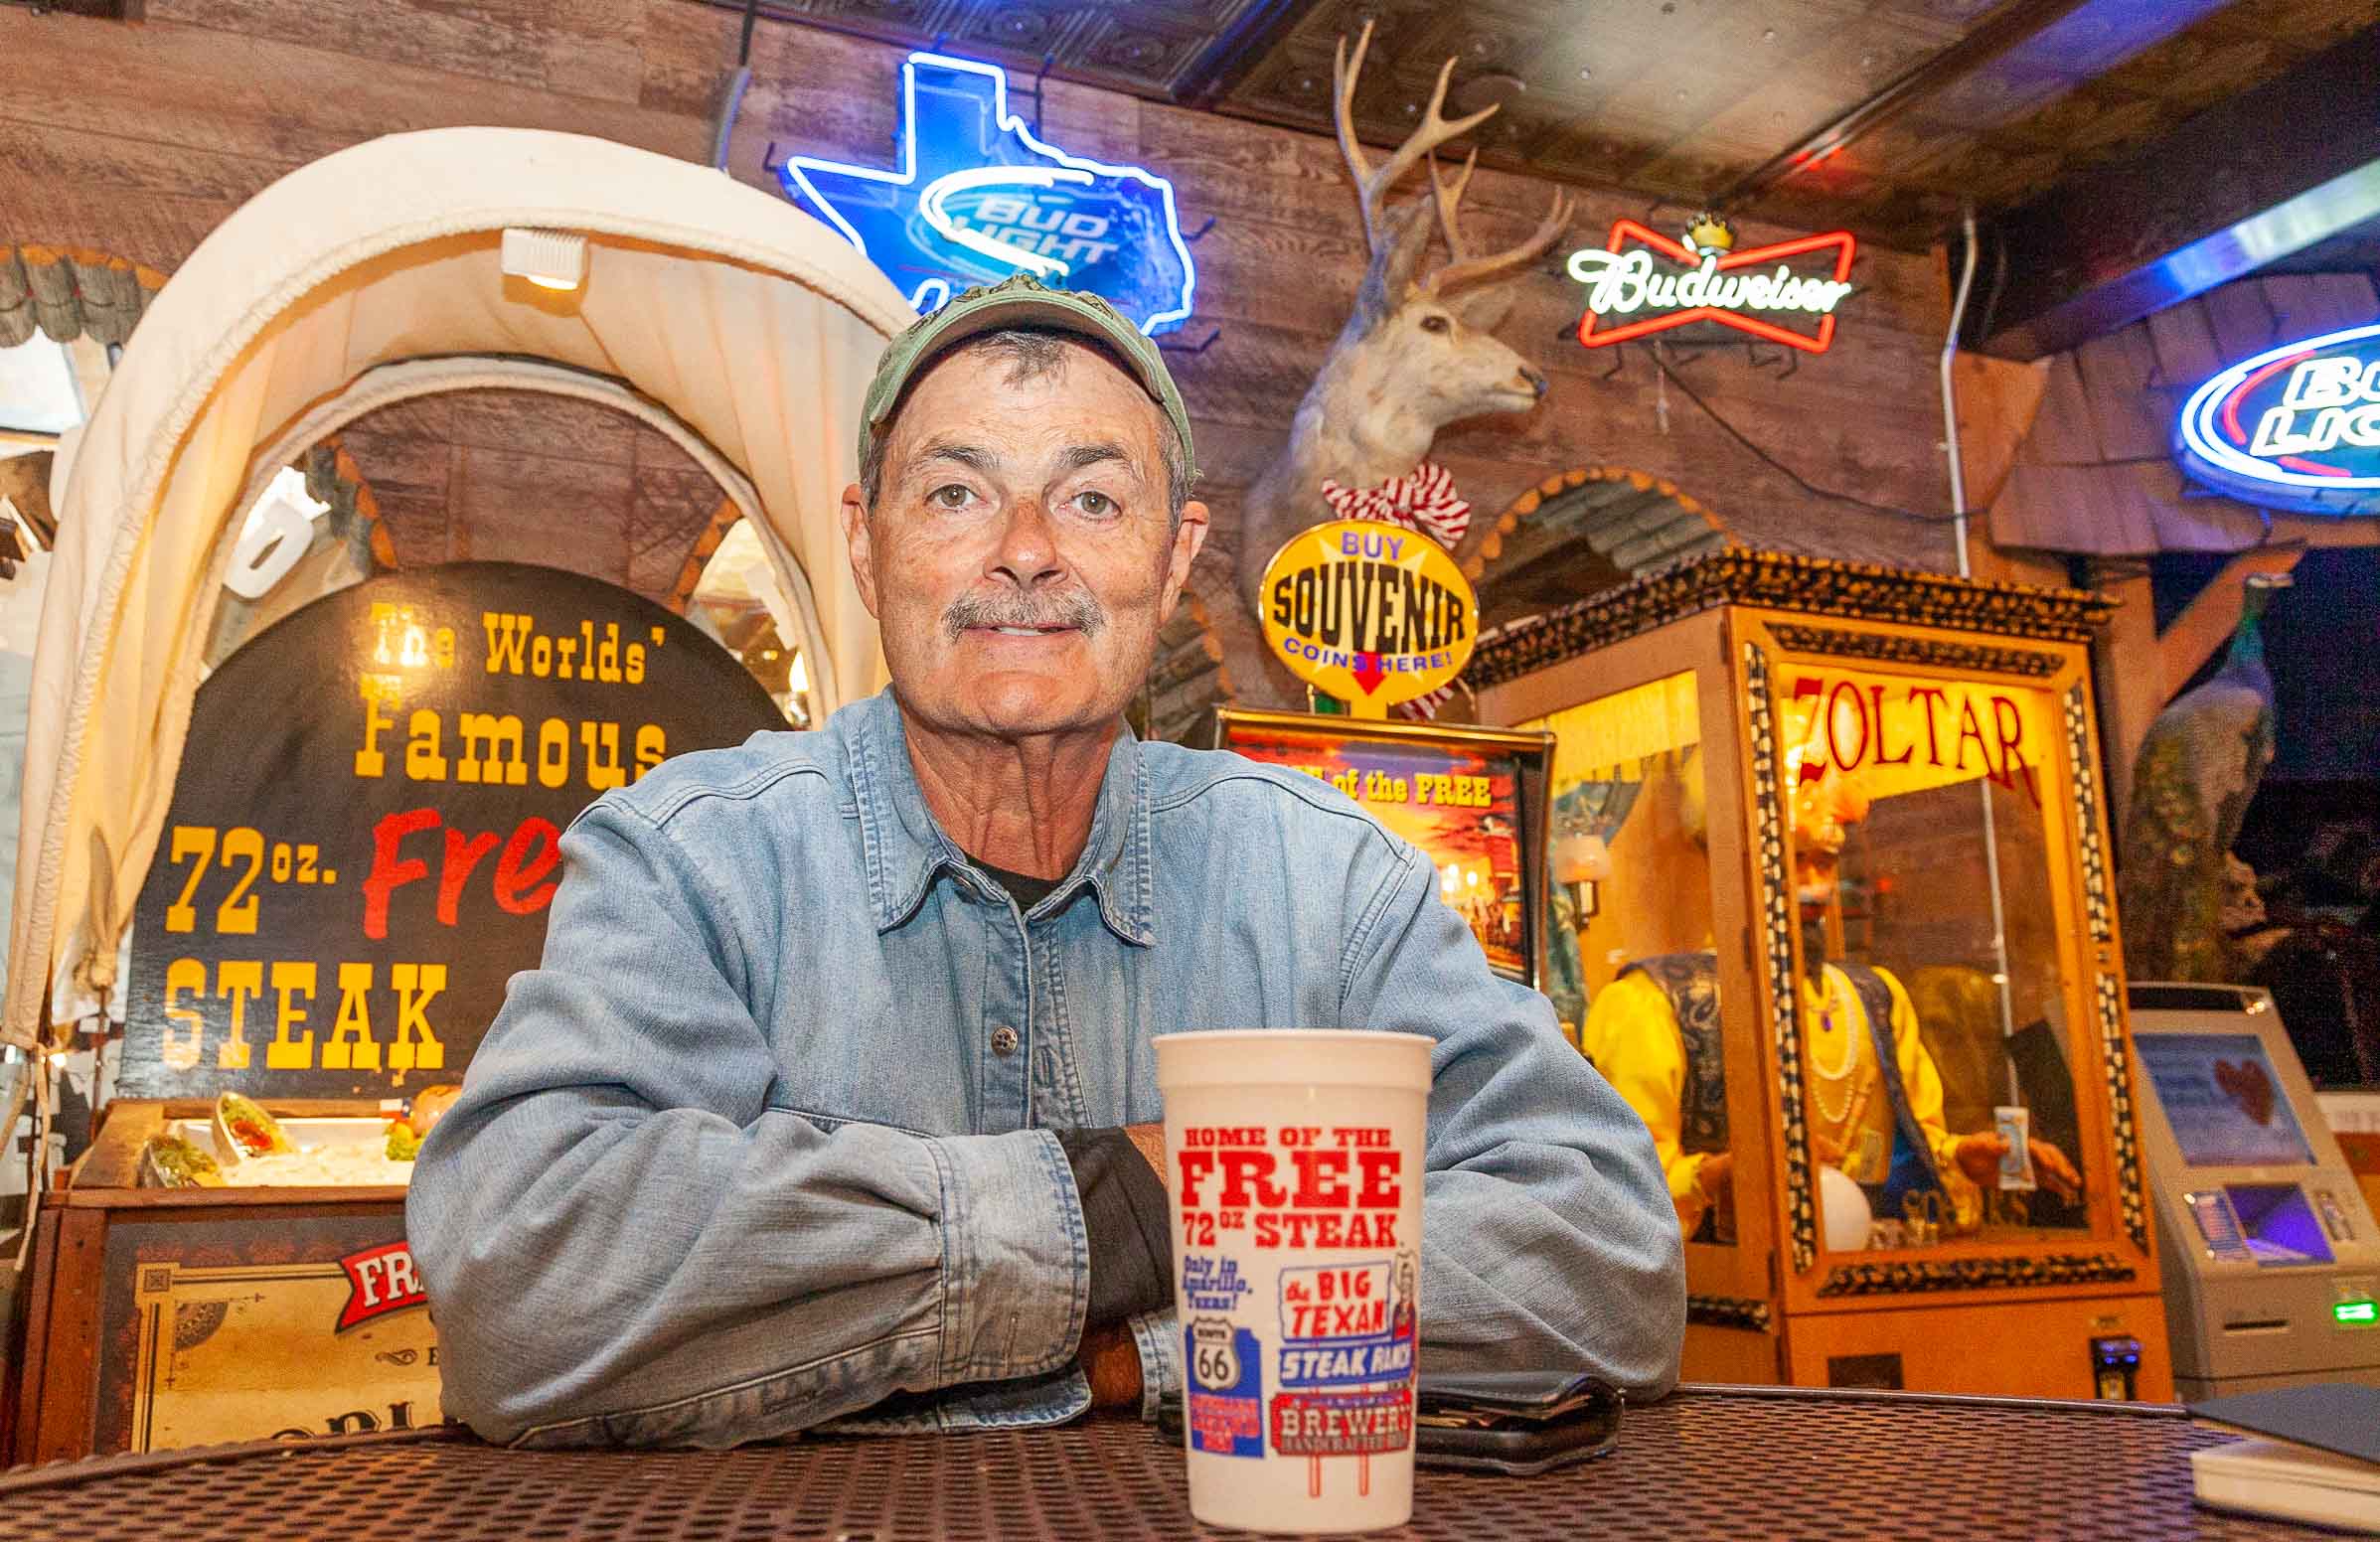 Bobby Lee, Chef der "Big Texan Steak Ranch" in Amarillo, Texas.